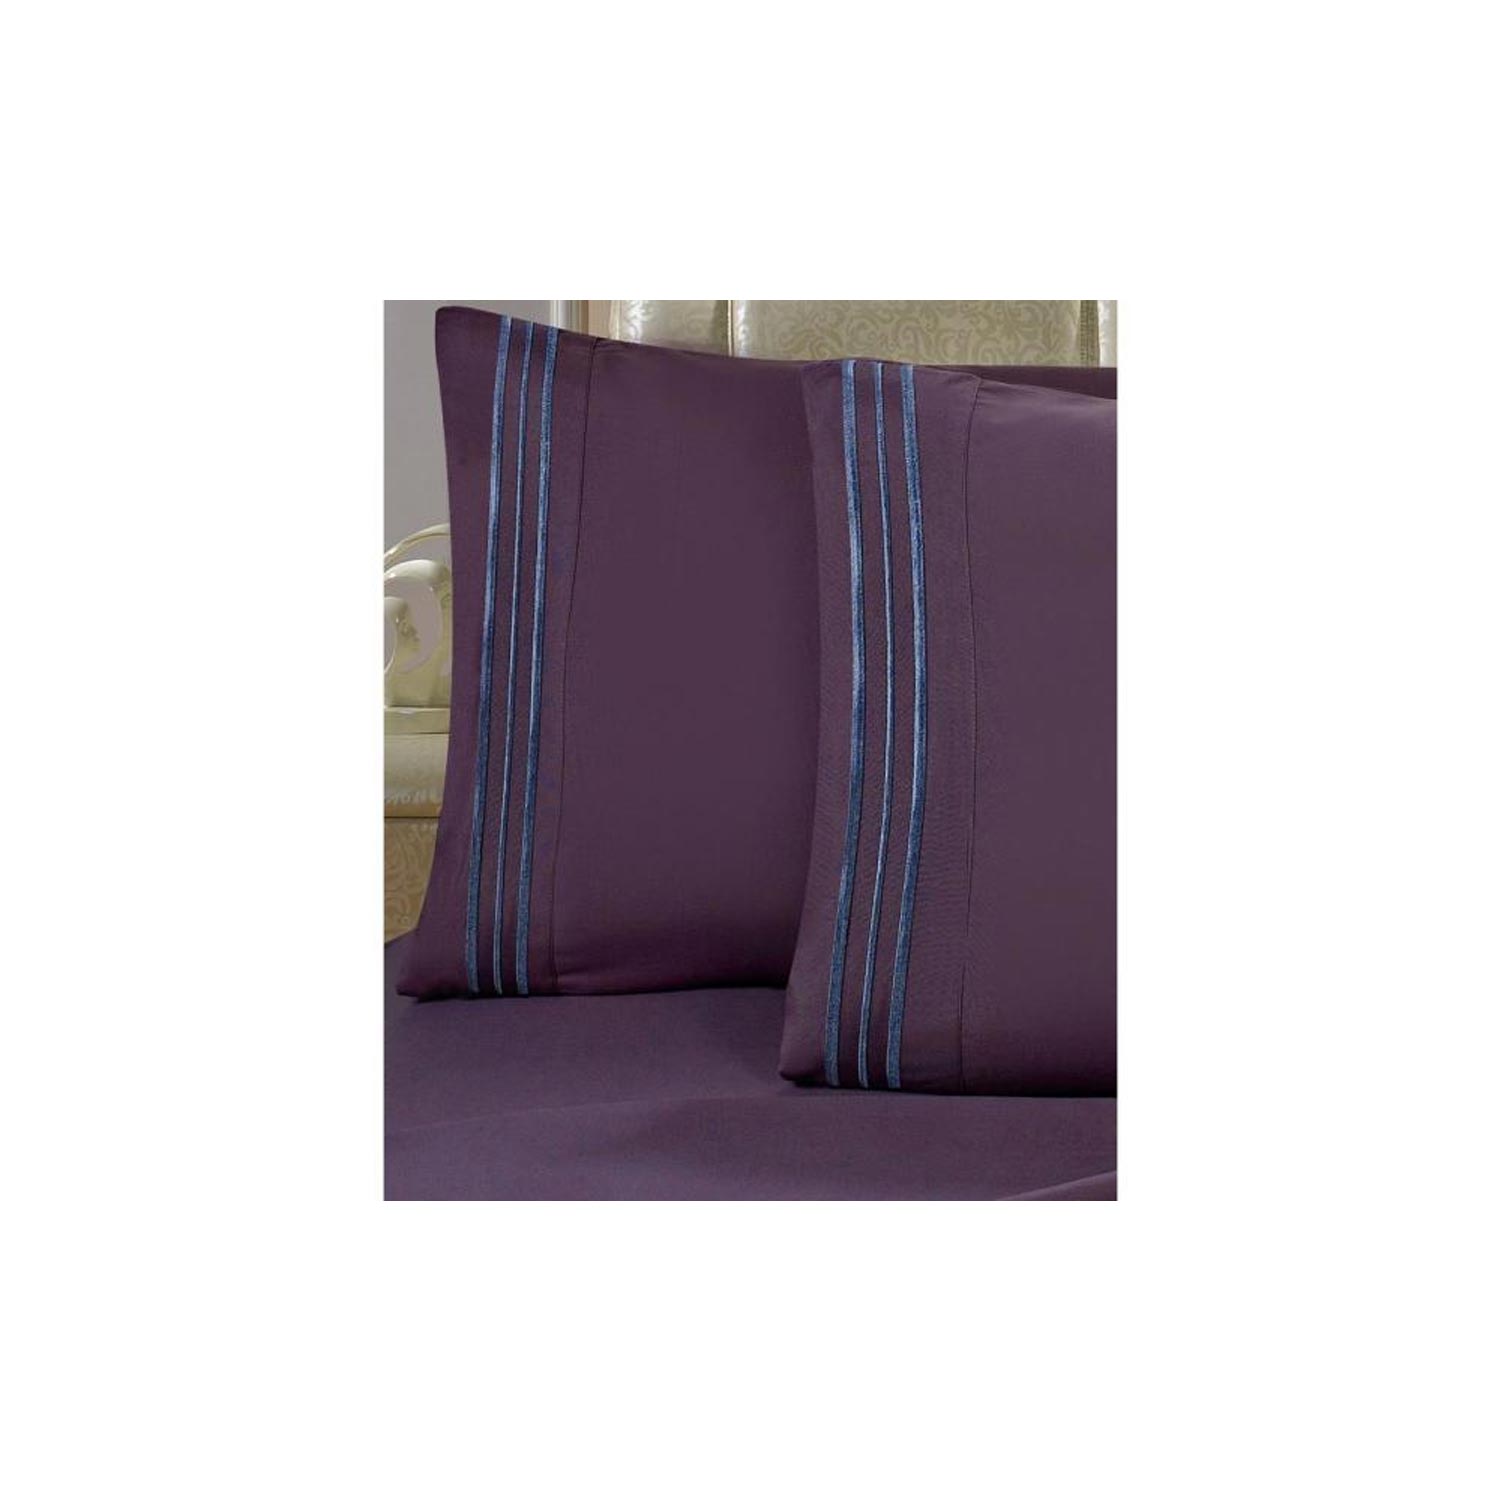 Elegant Comfort 1500 Thread Count 4 pcs Bed Sheet Set, Deep Pocket Up to 16" 